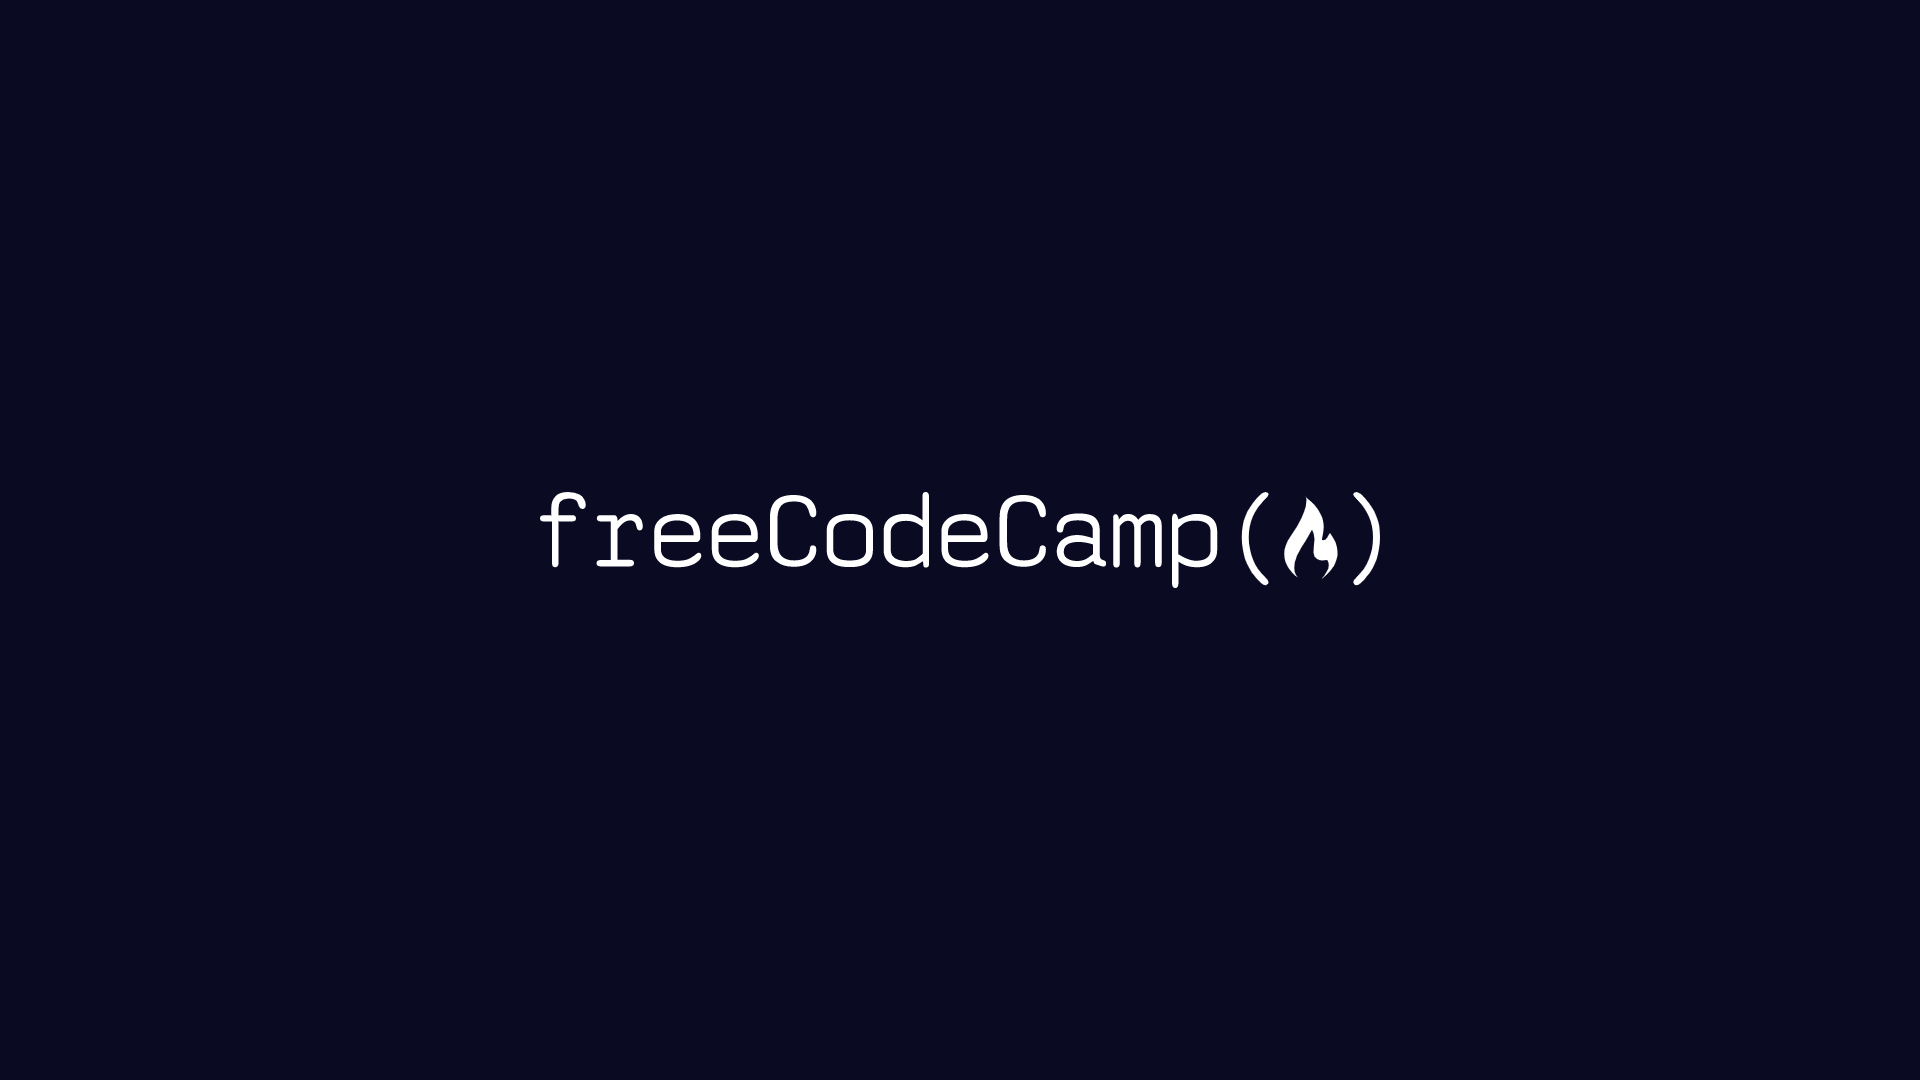 freecodecamp logo